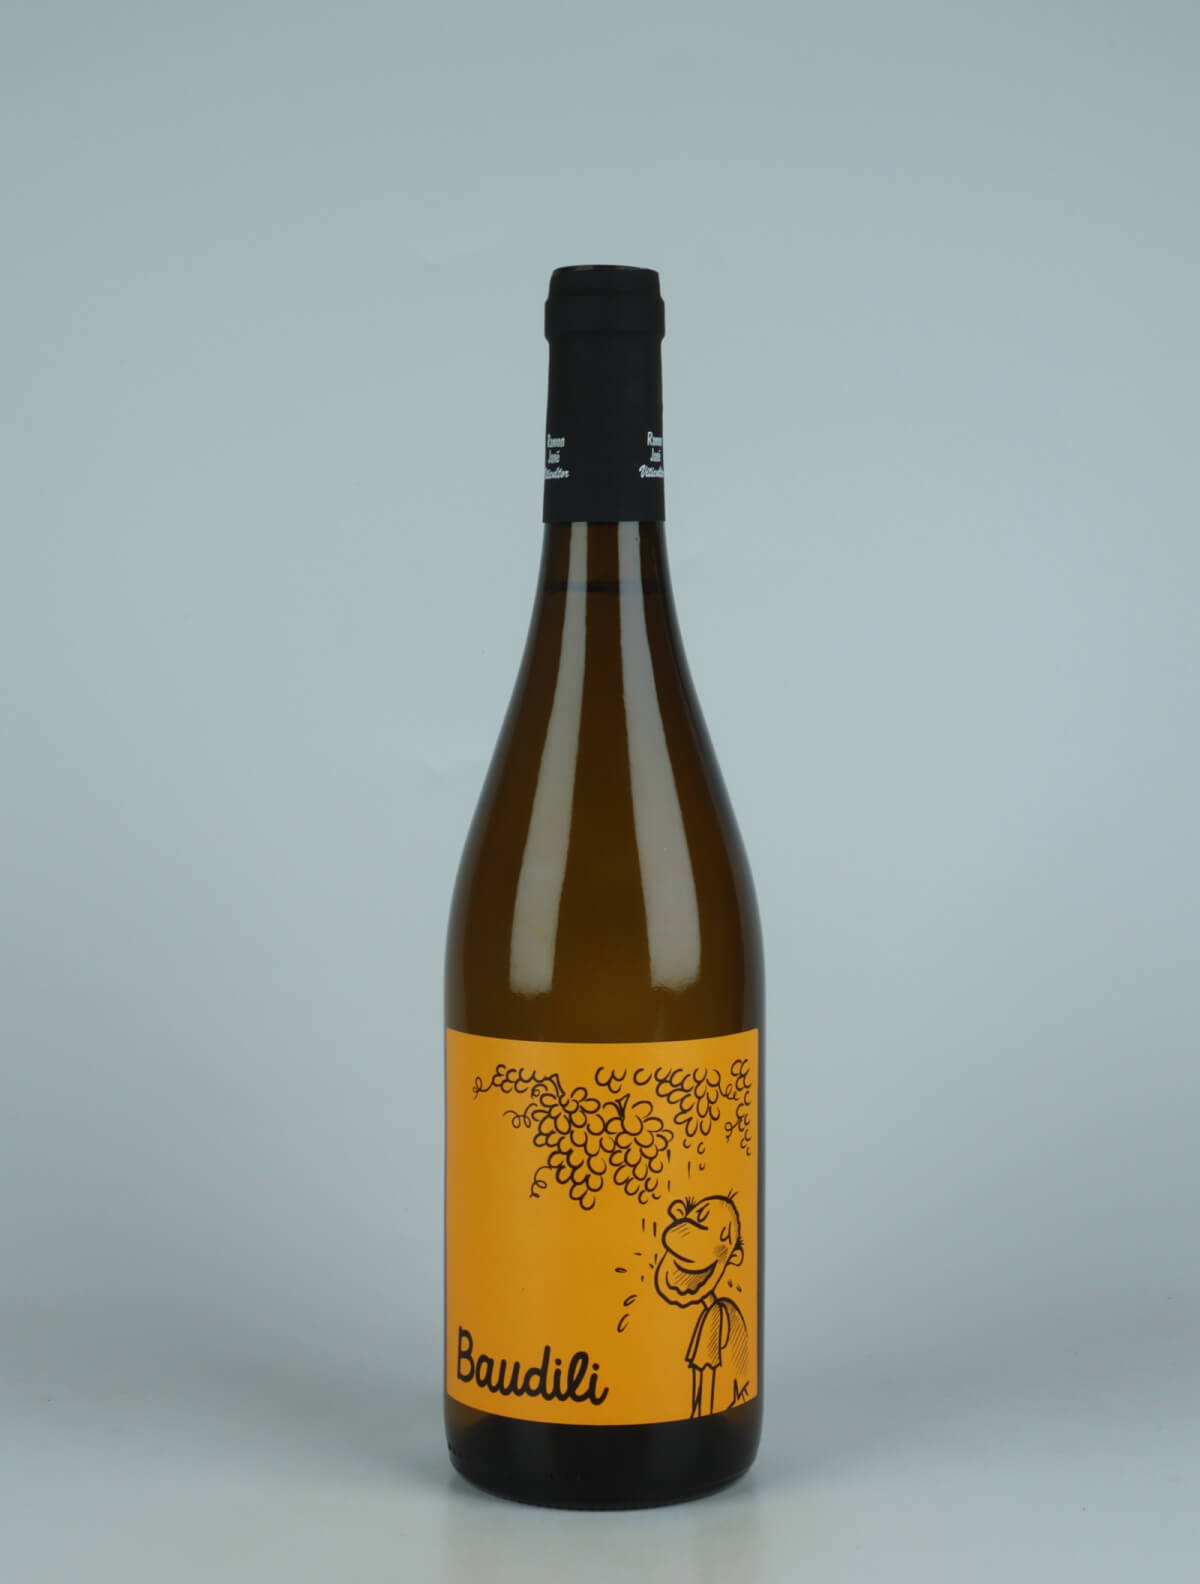 A bottle 2022 Baudili Blanc White wine from Mas Candí, Penedès in Spain